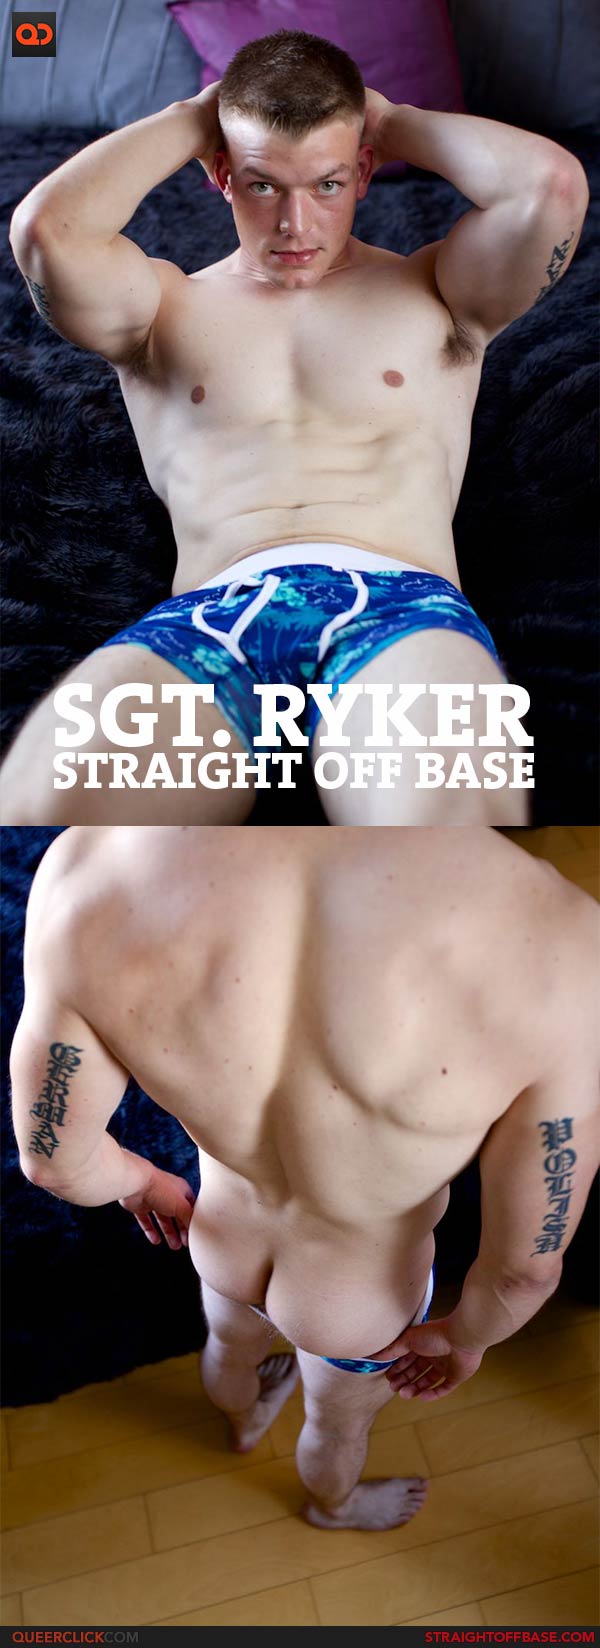 Straight Off Base: Sgt. Ryker